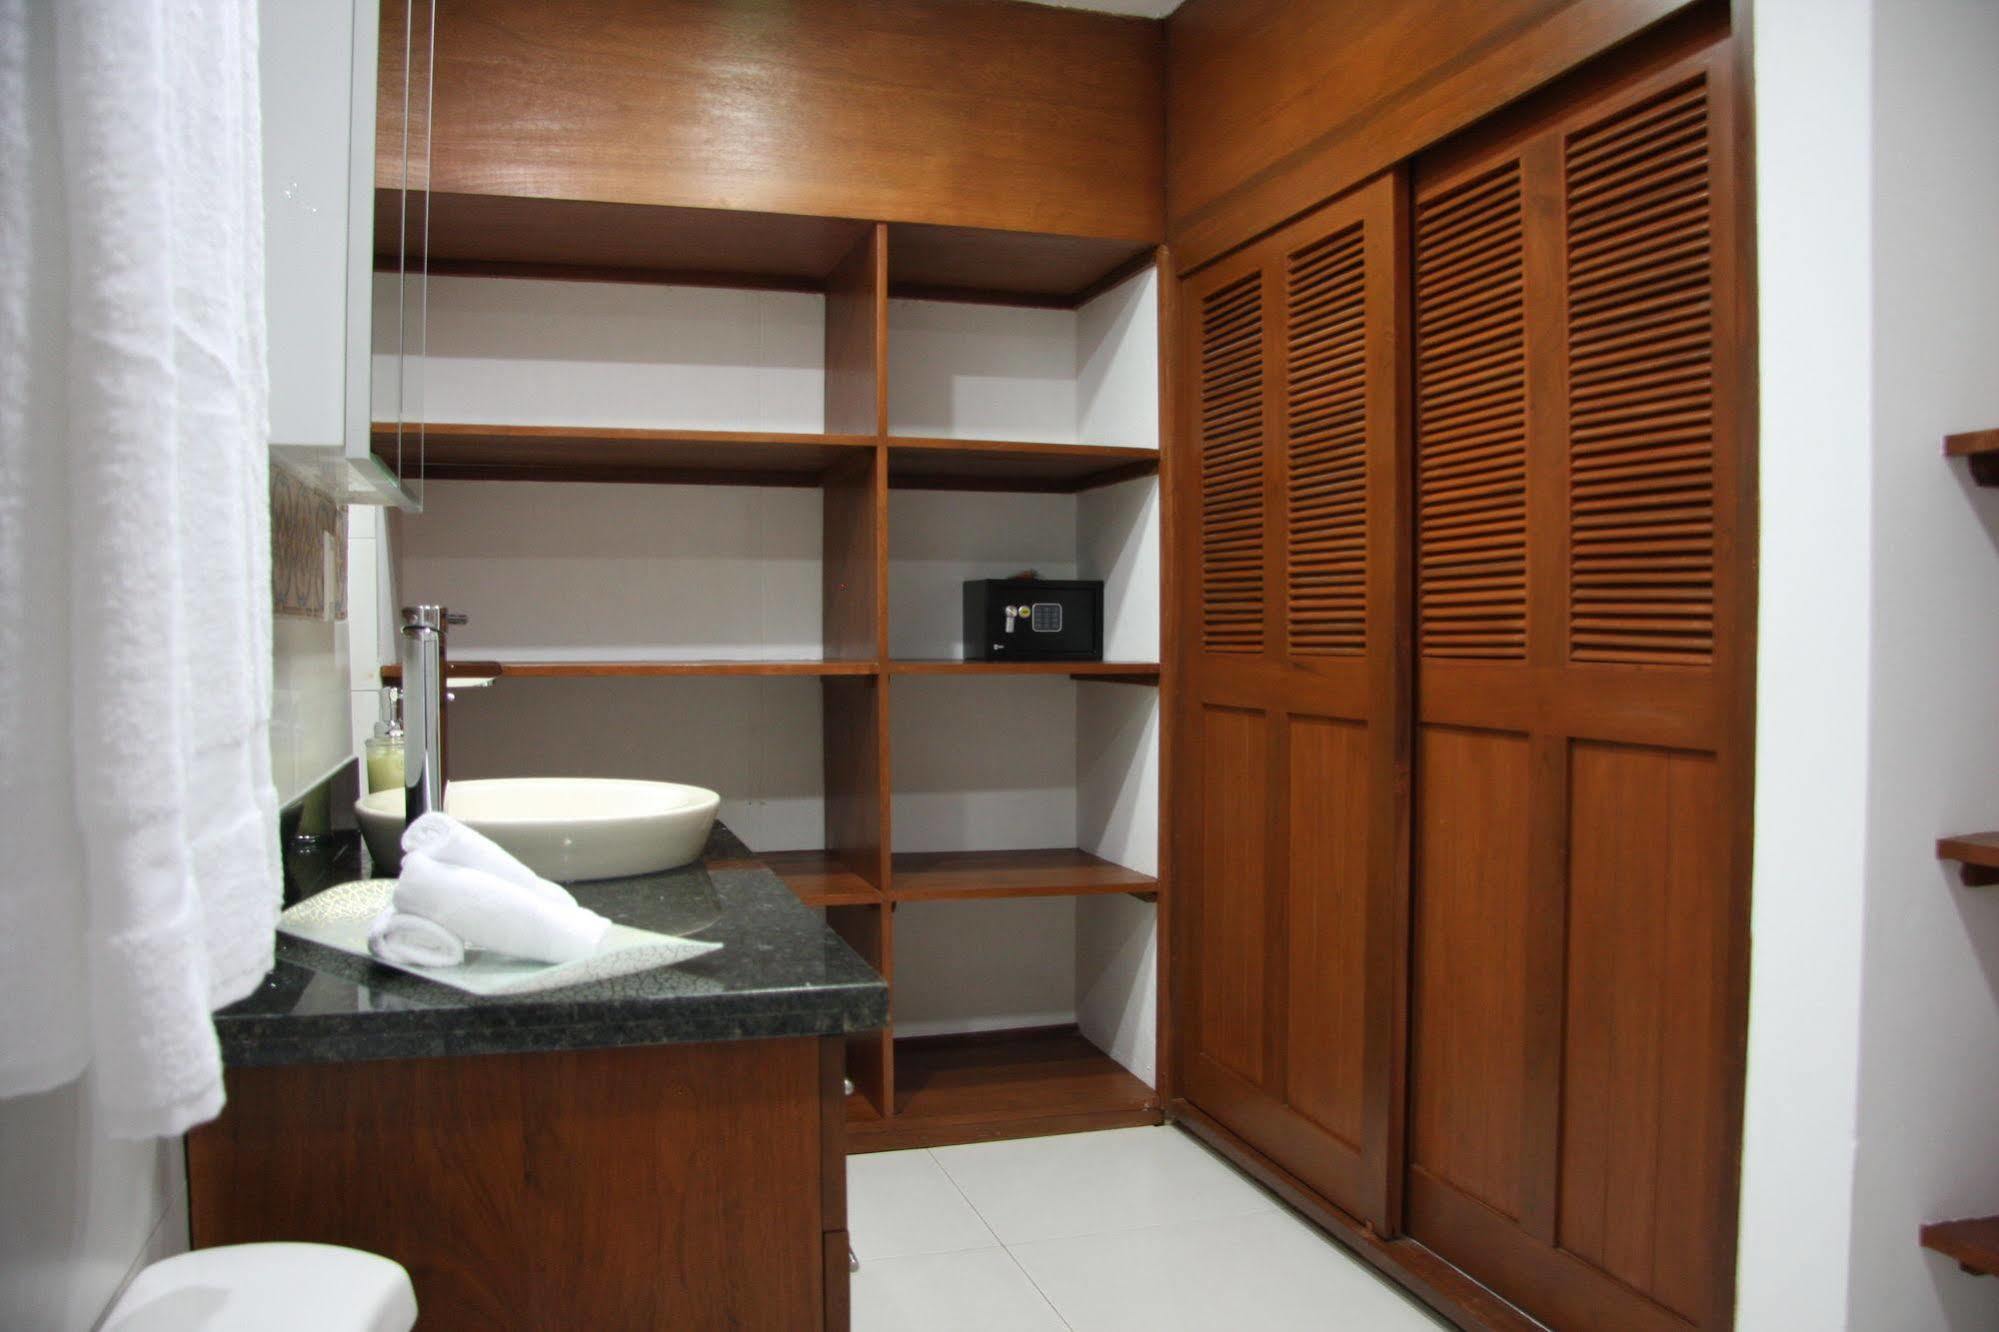 El Mirador Suites And Lounge Managua Exterior photo